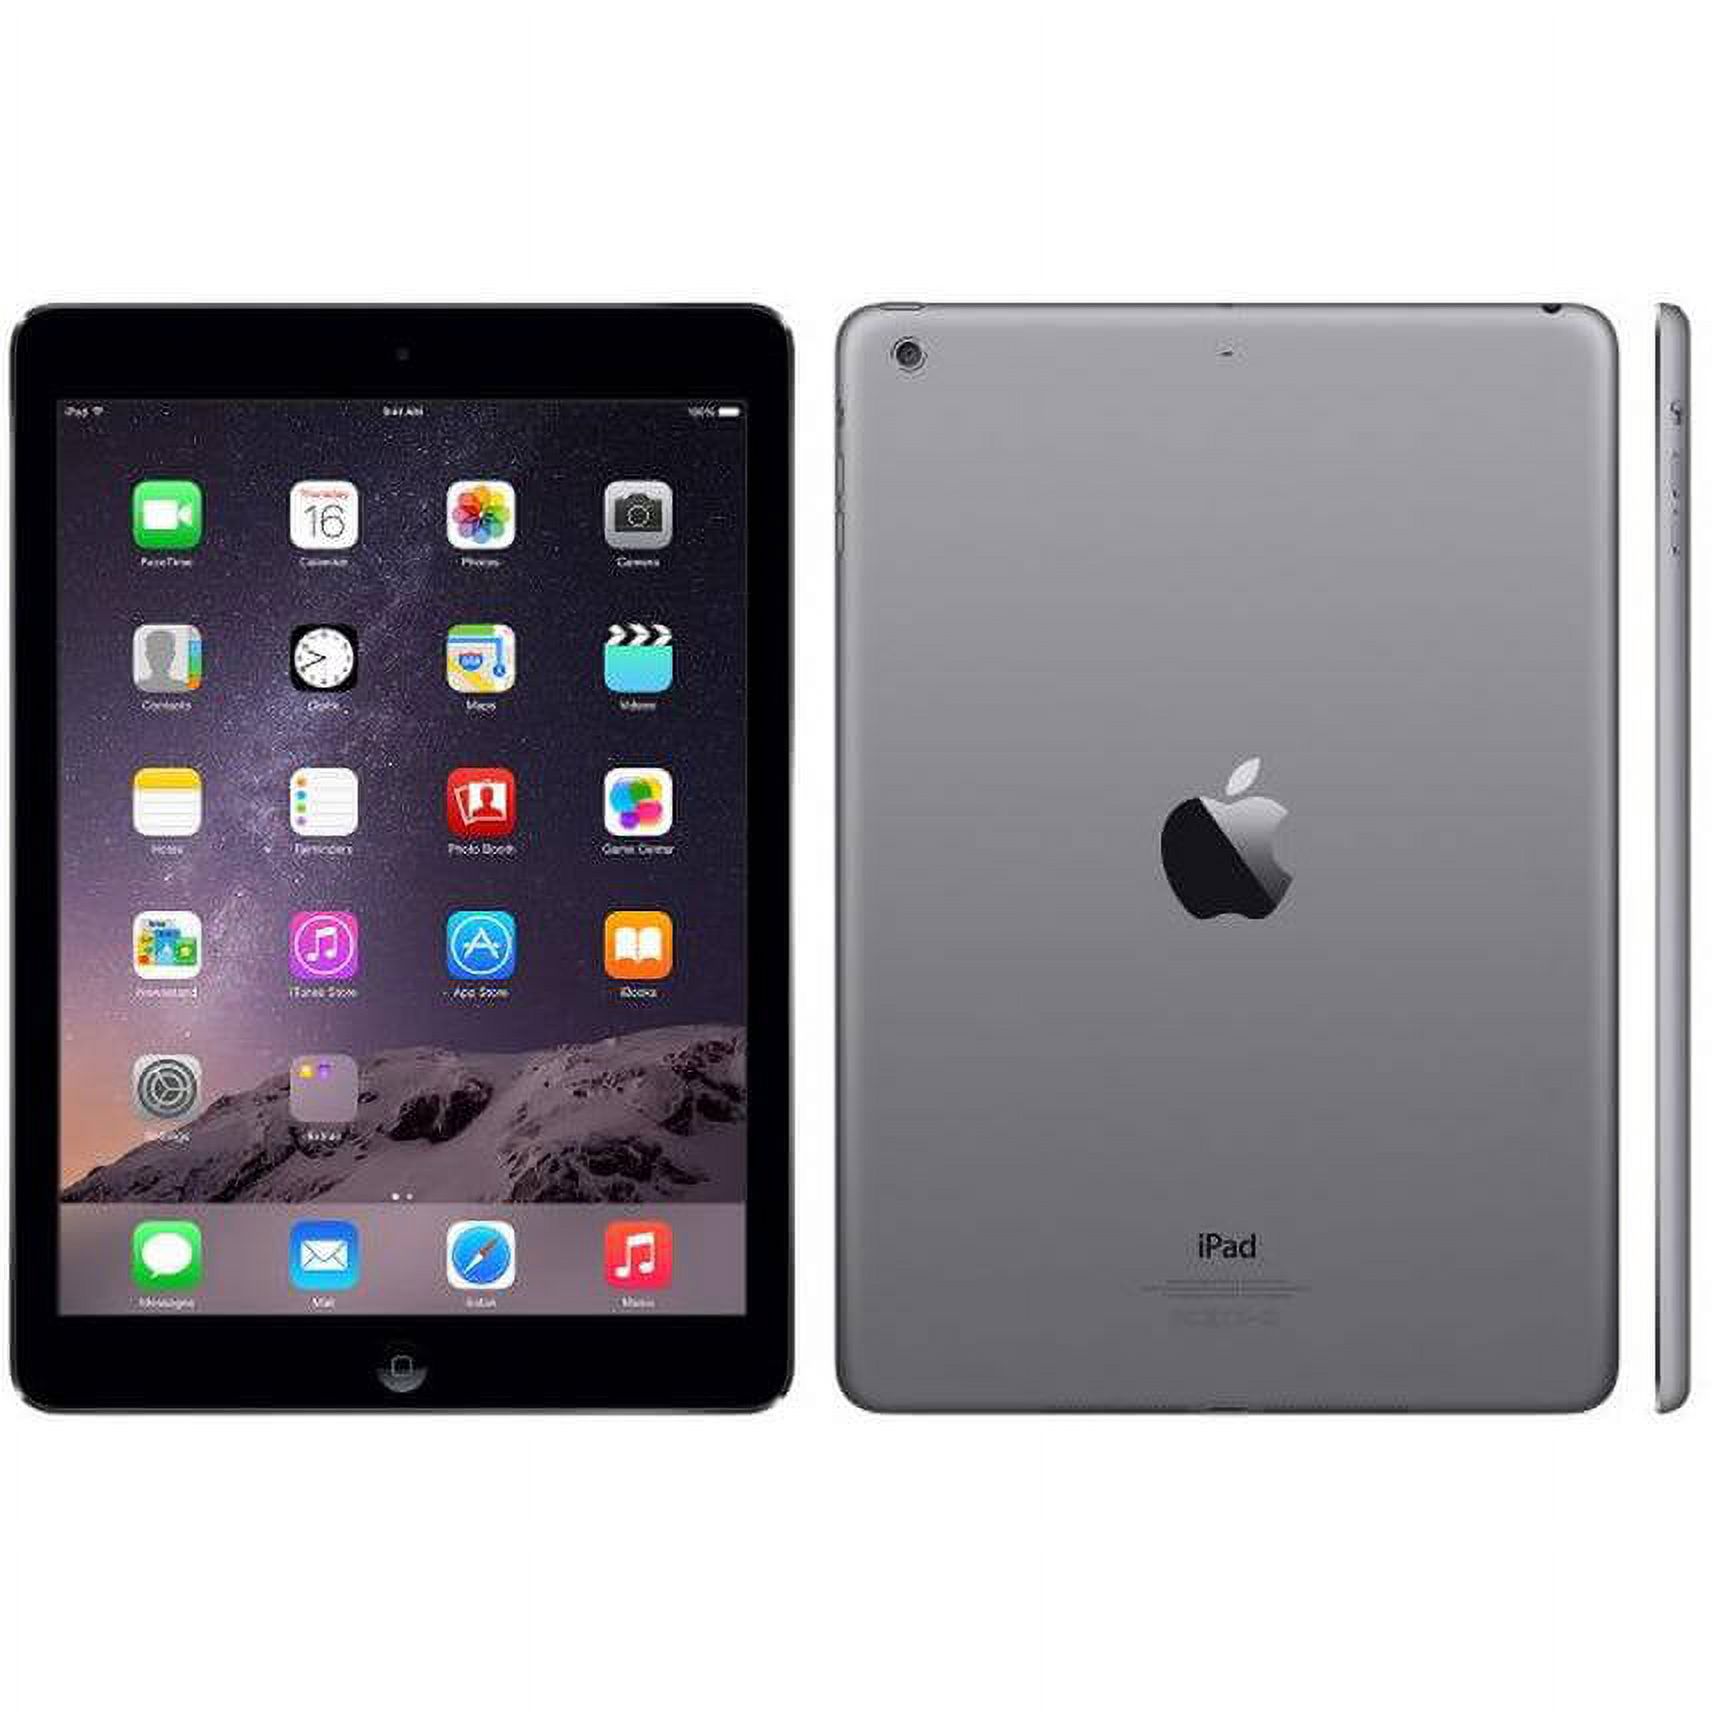 Restored Apple iPad Air 2 16GB WiFi 2GB iOS 10 9.7" Tablet - Space Gray (Refurbished) - image 3 of 4